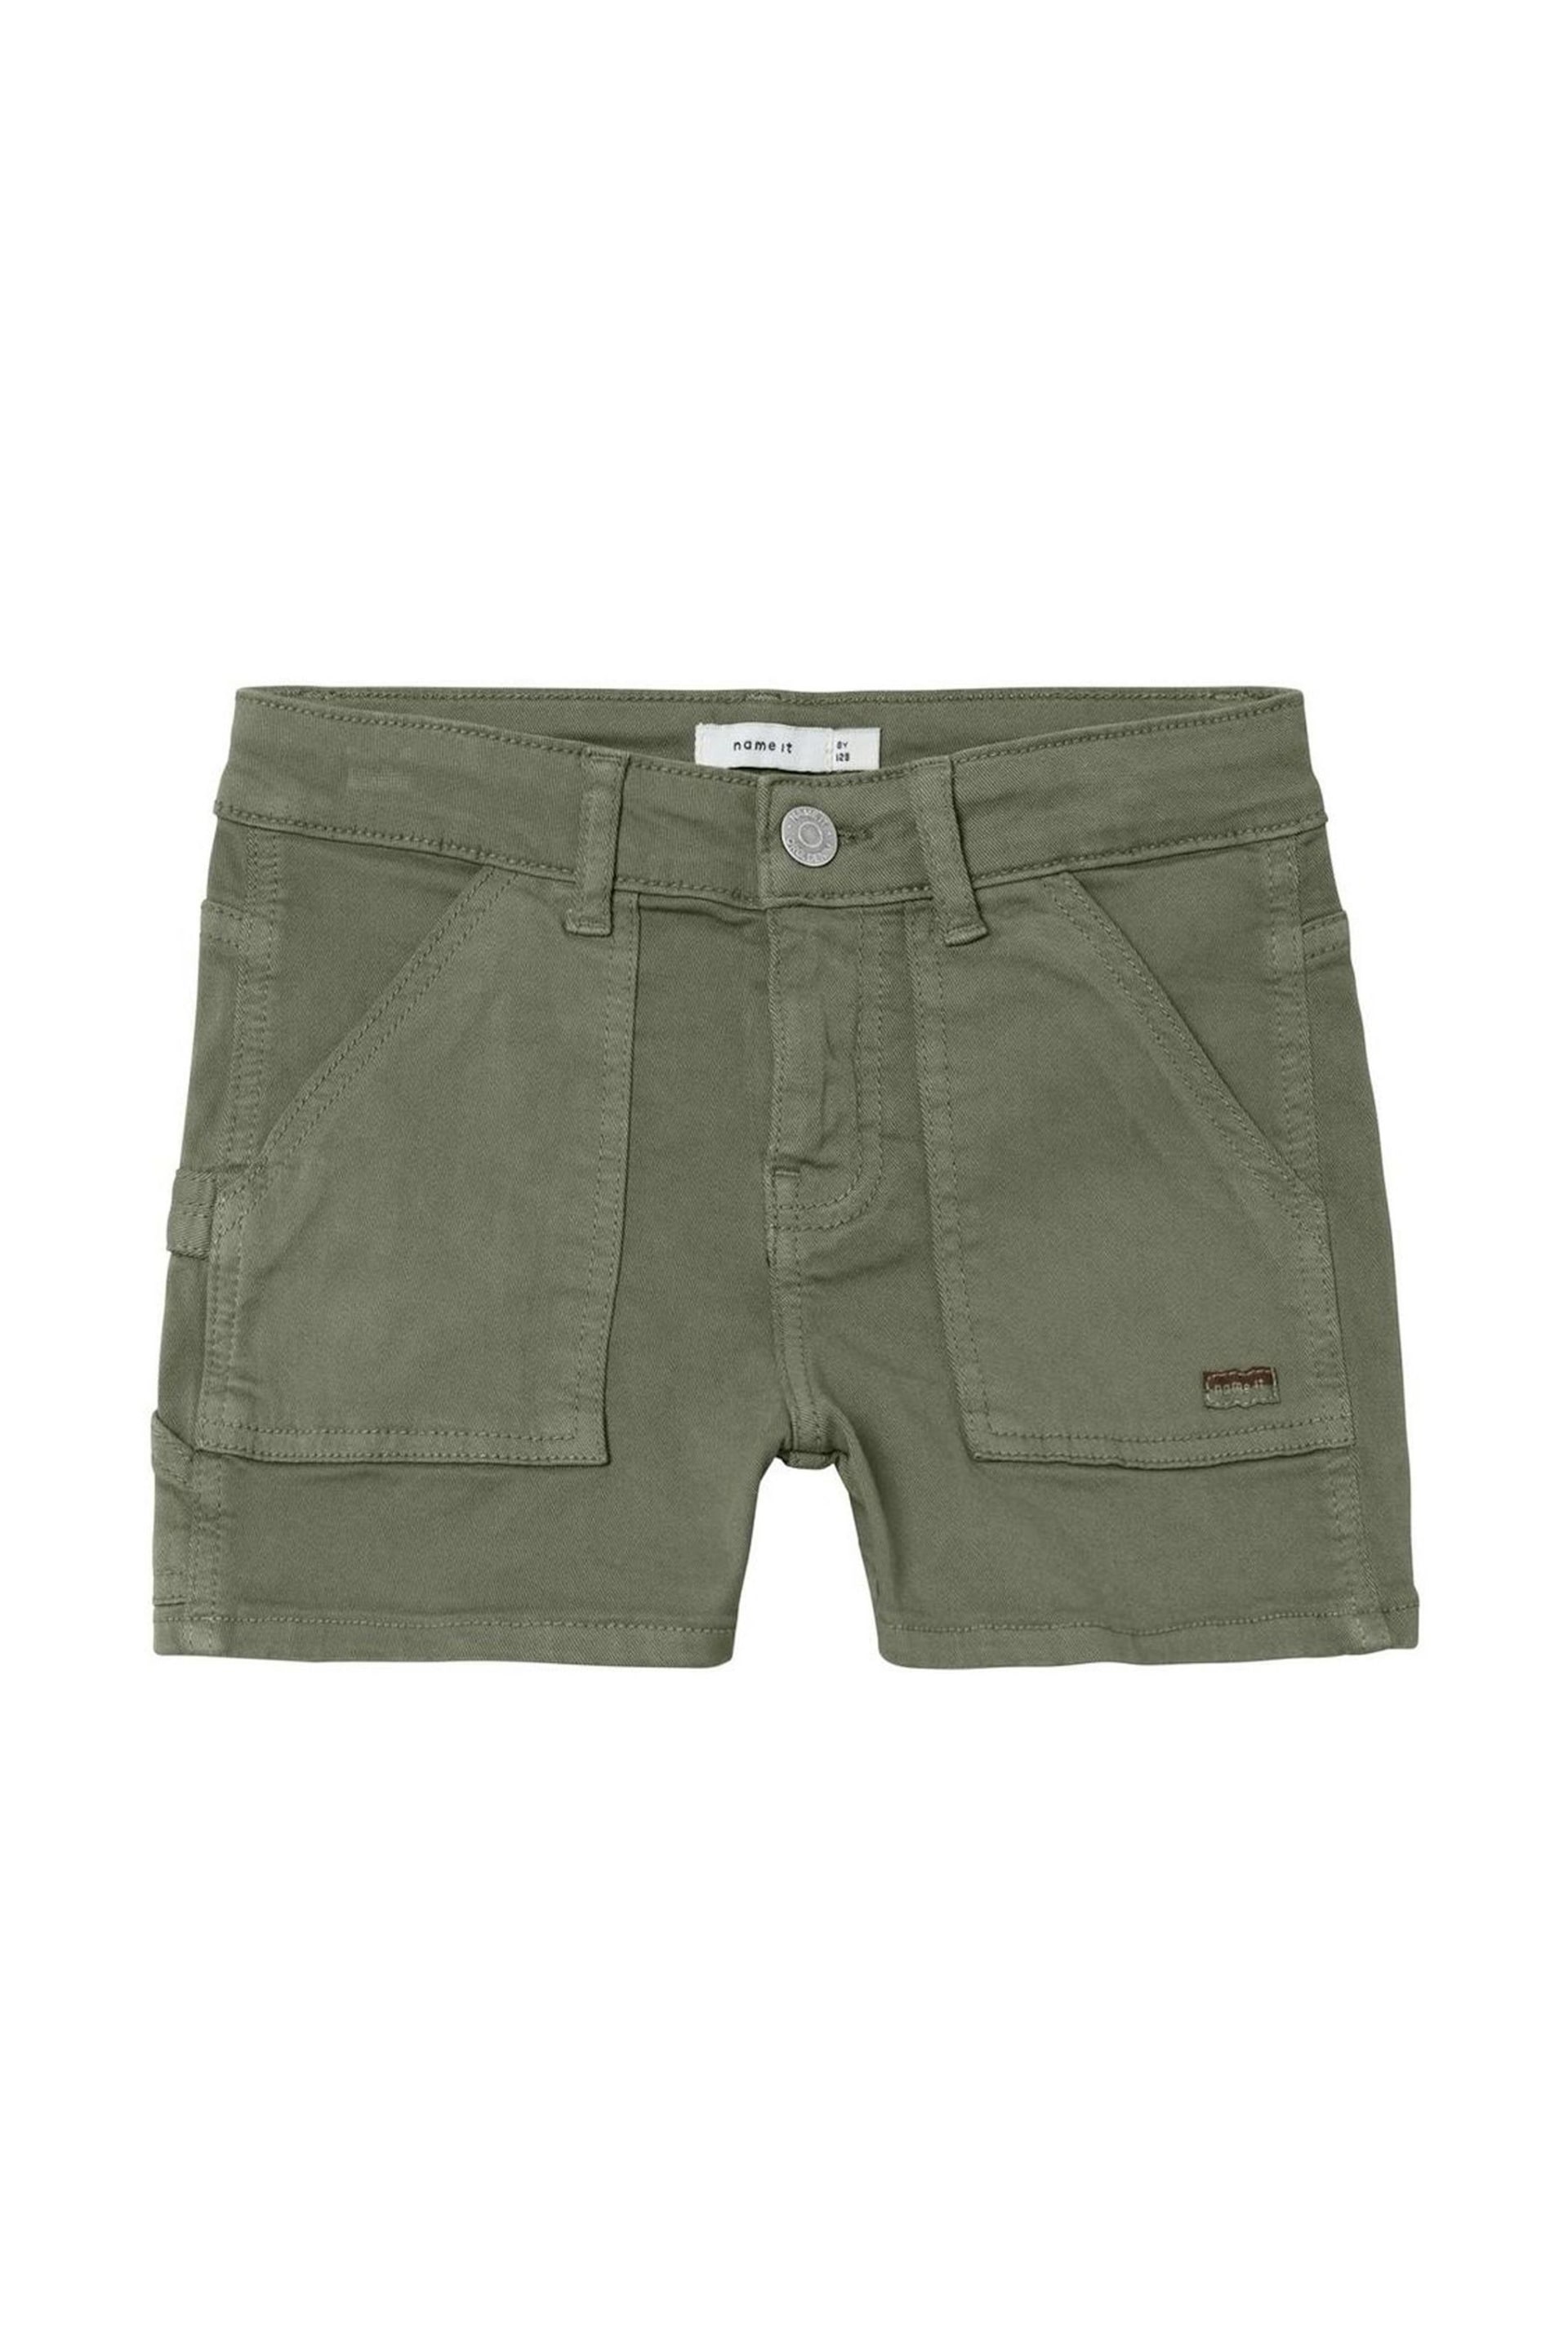 Name It Green Pocket Shorts - Image 1 of 3